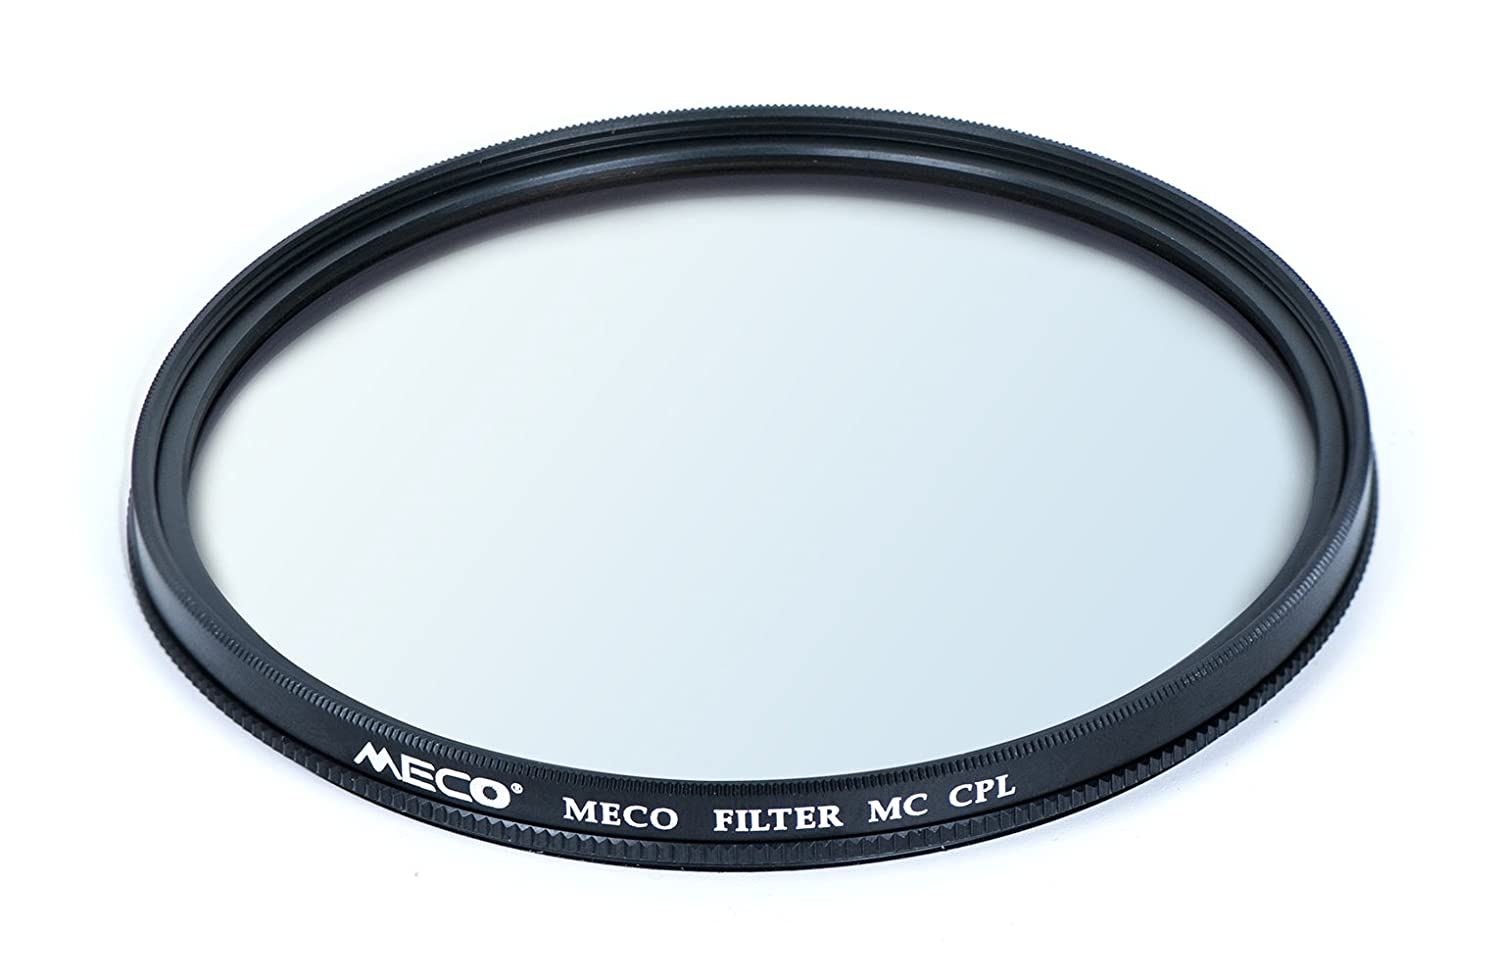 Meco 67mm MC CPL Filter - The Camerashop